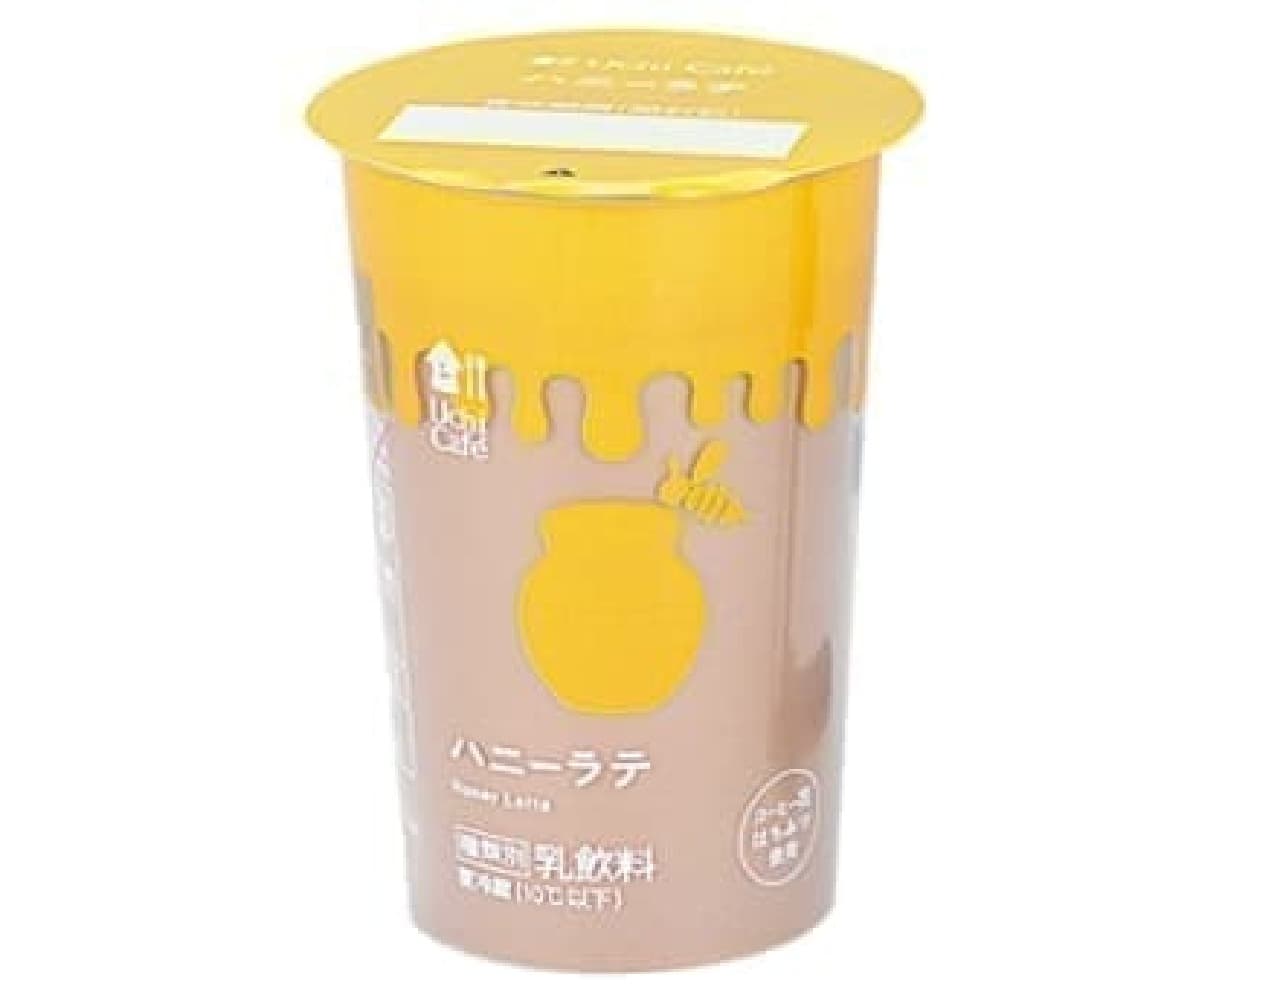 Lawson "Uchi Cafe Honey Latte 240ml"